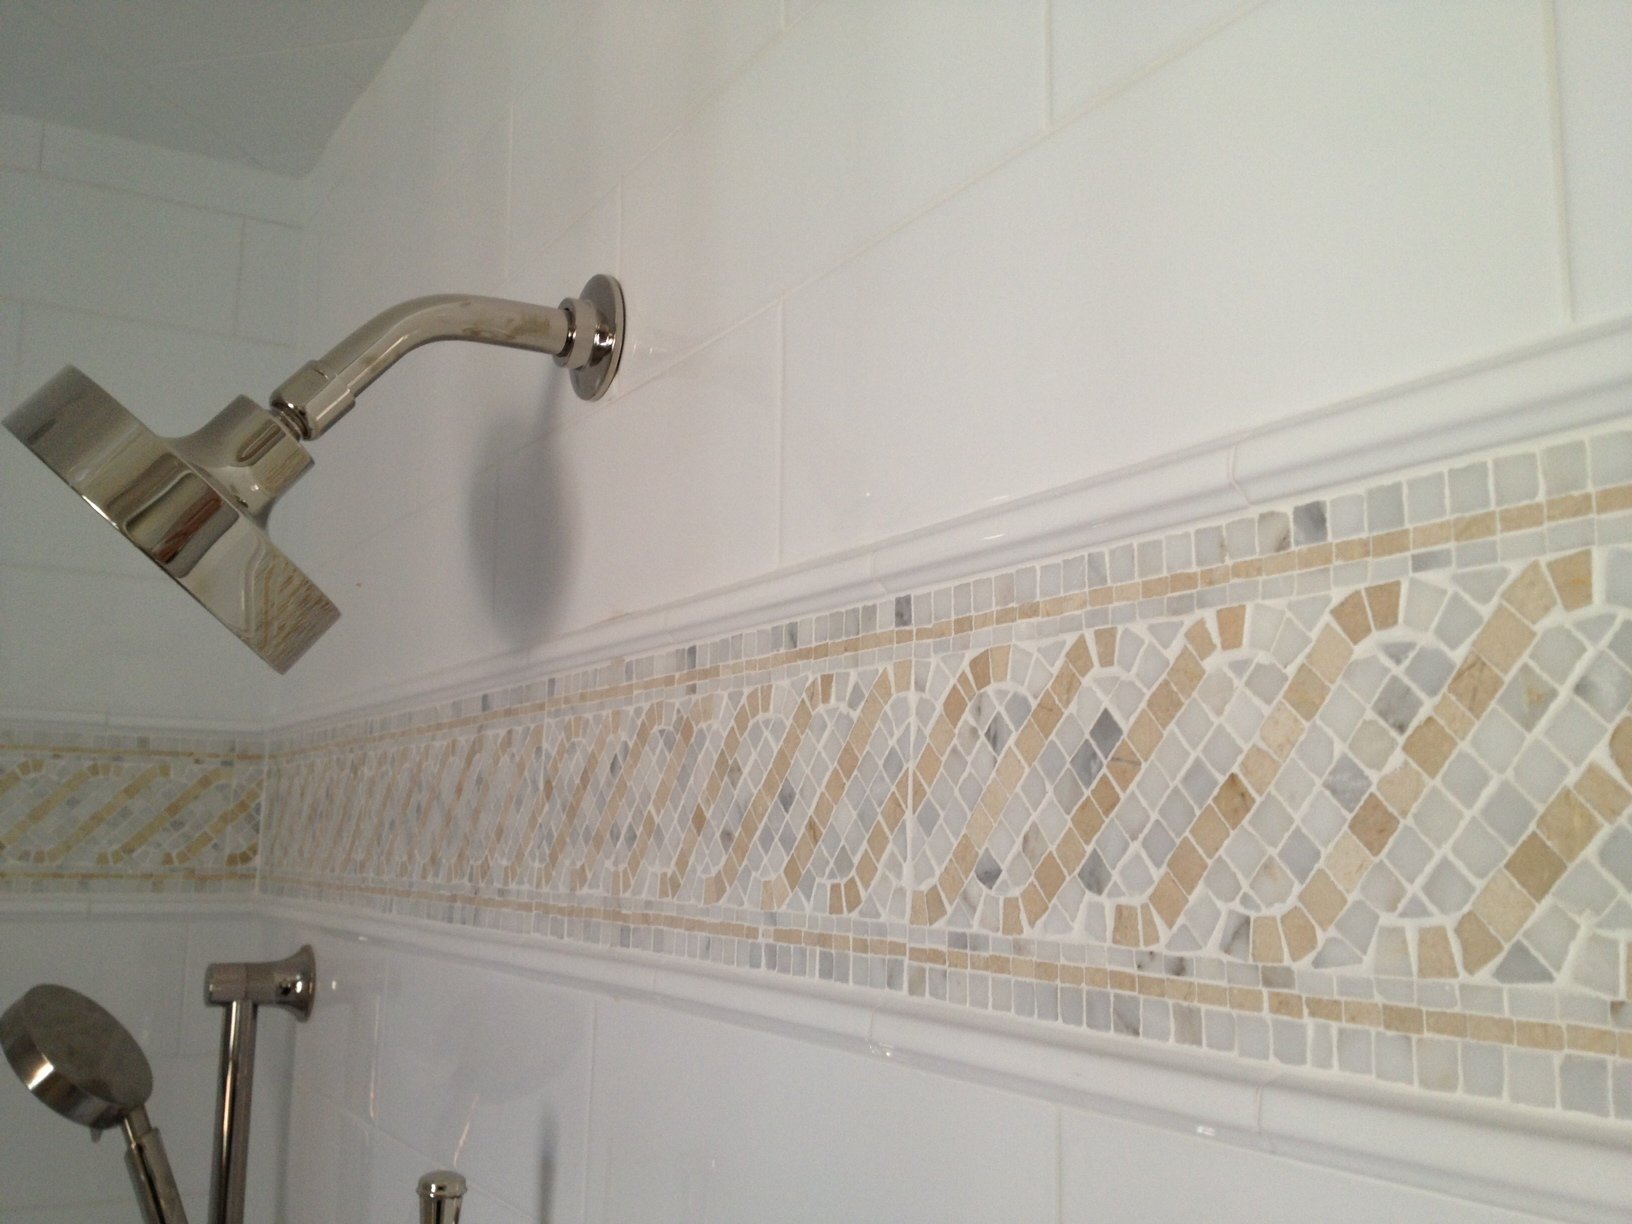 45 Mosaic Wallpaper Borders Bathroom, How To Change Border Tiles In Bathroom